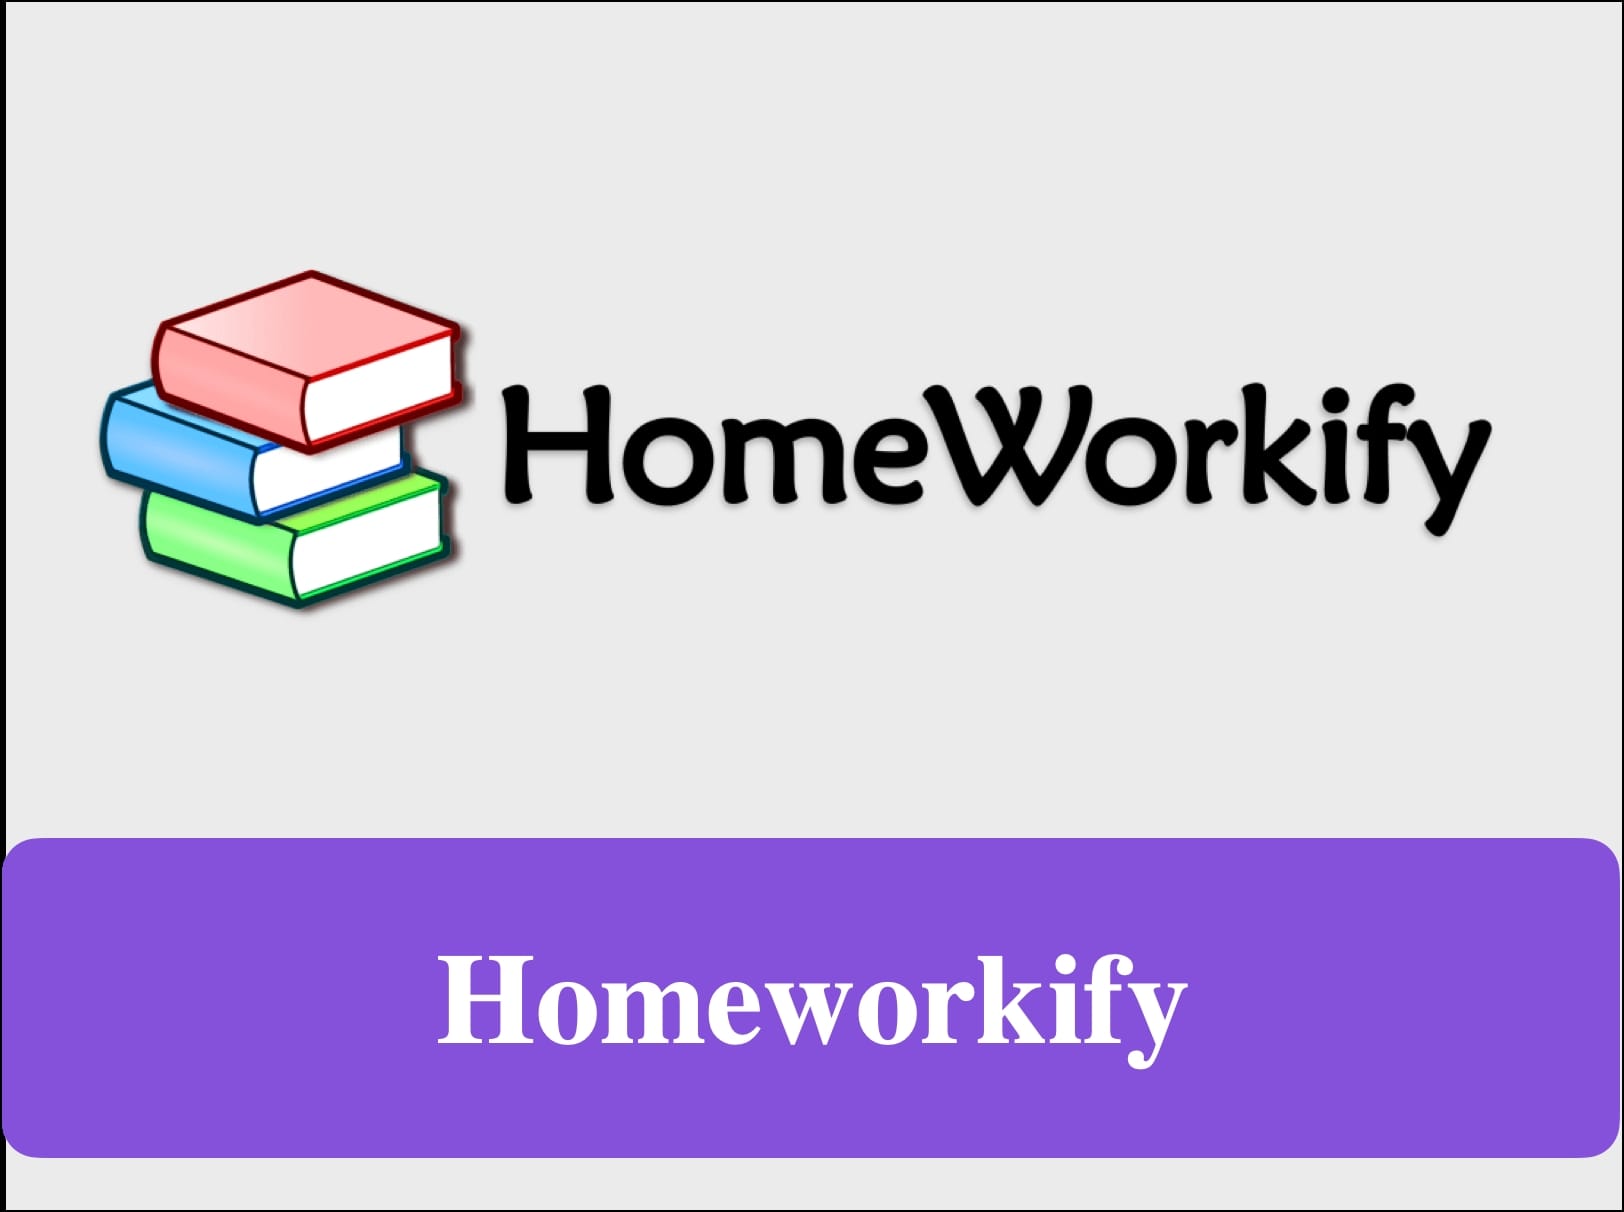 Homeworkify: The Ultimate Homework Solution